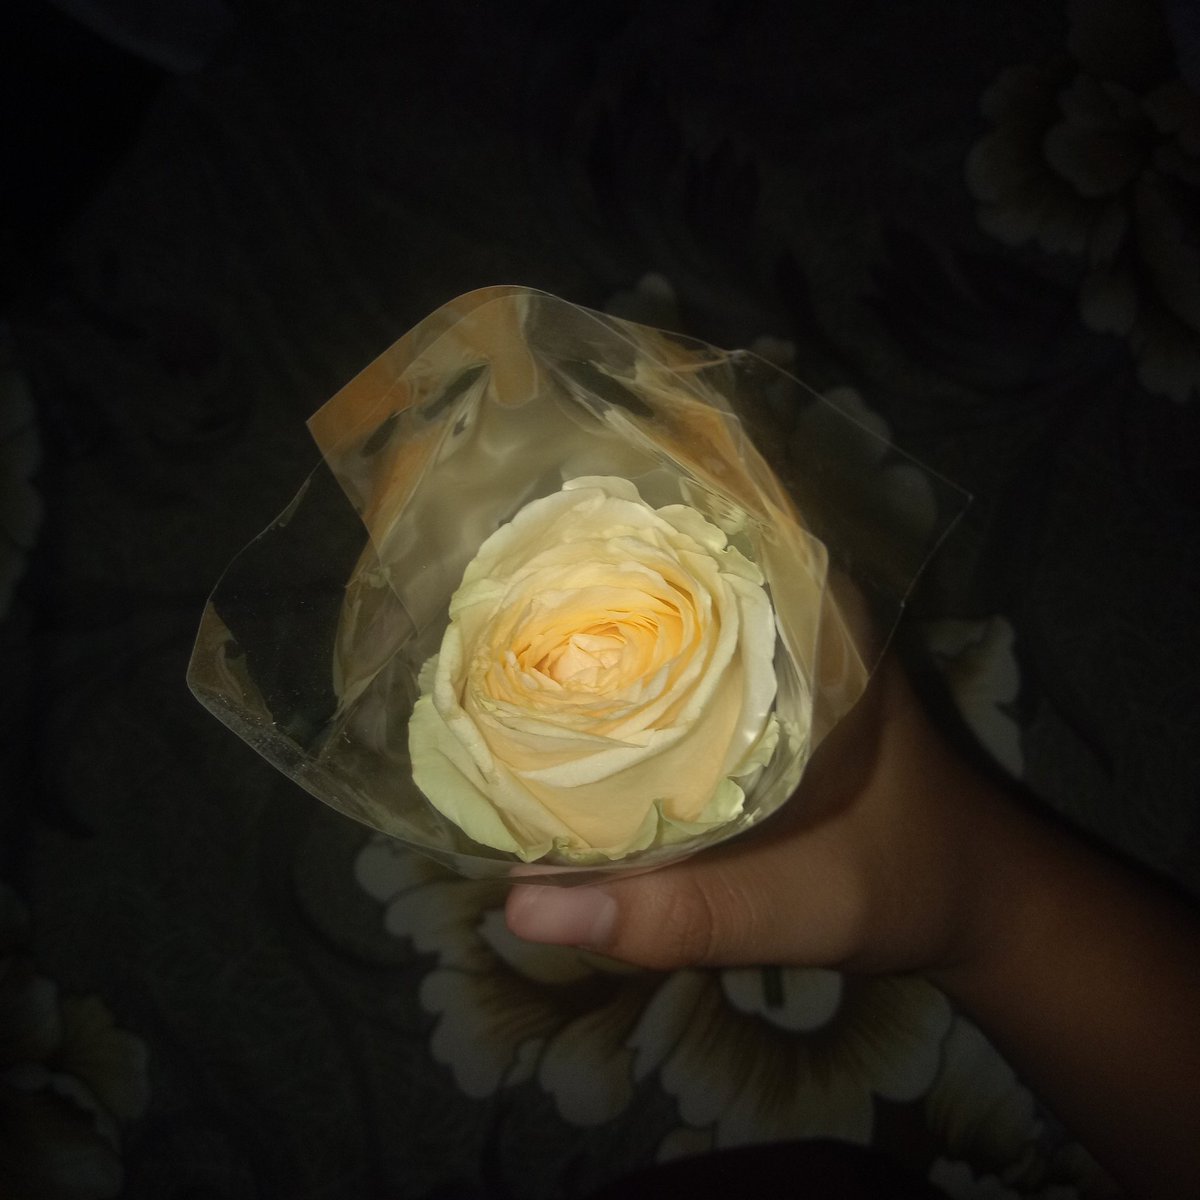 10th- Lemme flex this flower you gave me first kasi aaAaAaaaAHhHHh!!!!! Kinikilig padin ako. HAHAHAHAHAHAHAHAHAHAHA so you bought a peach rose for me kasi sabi mo walang purple, and this is your 2nd fave color.